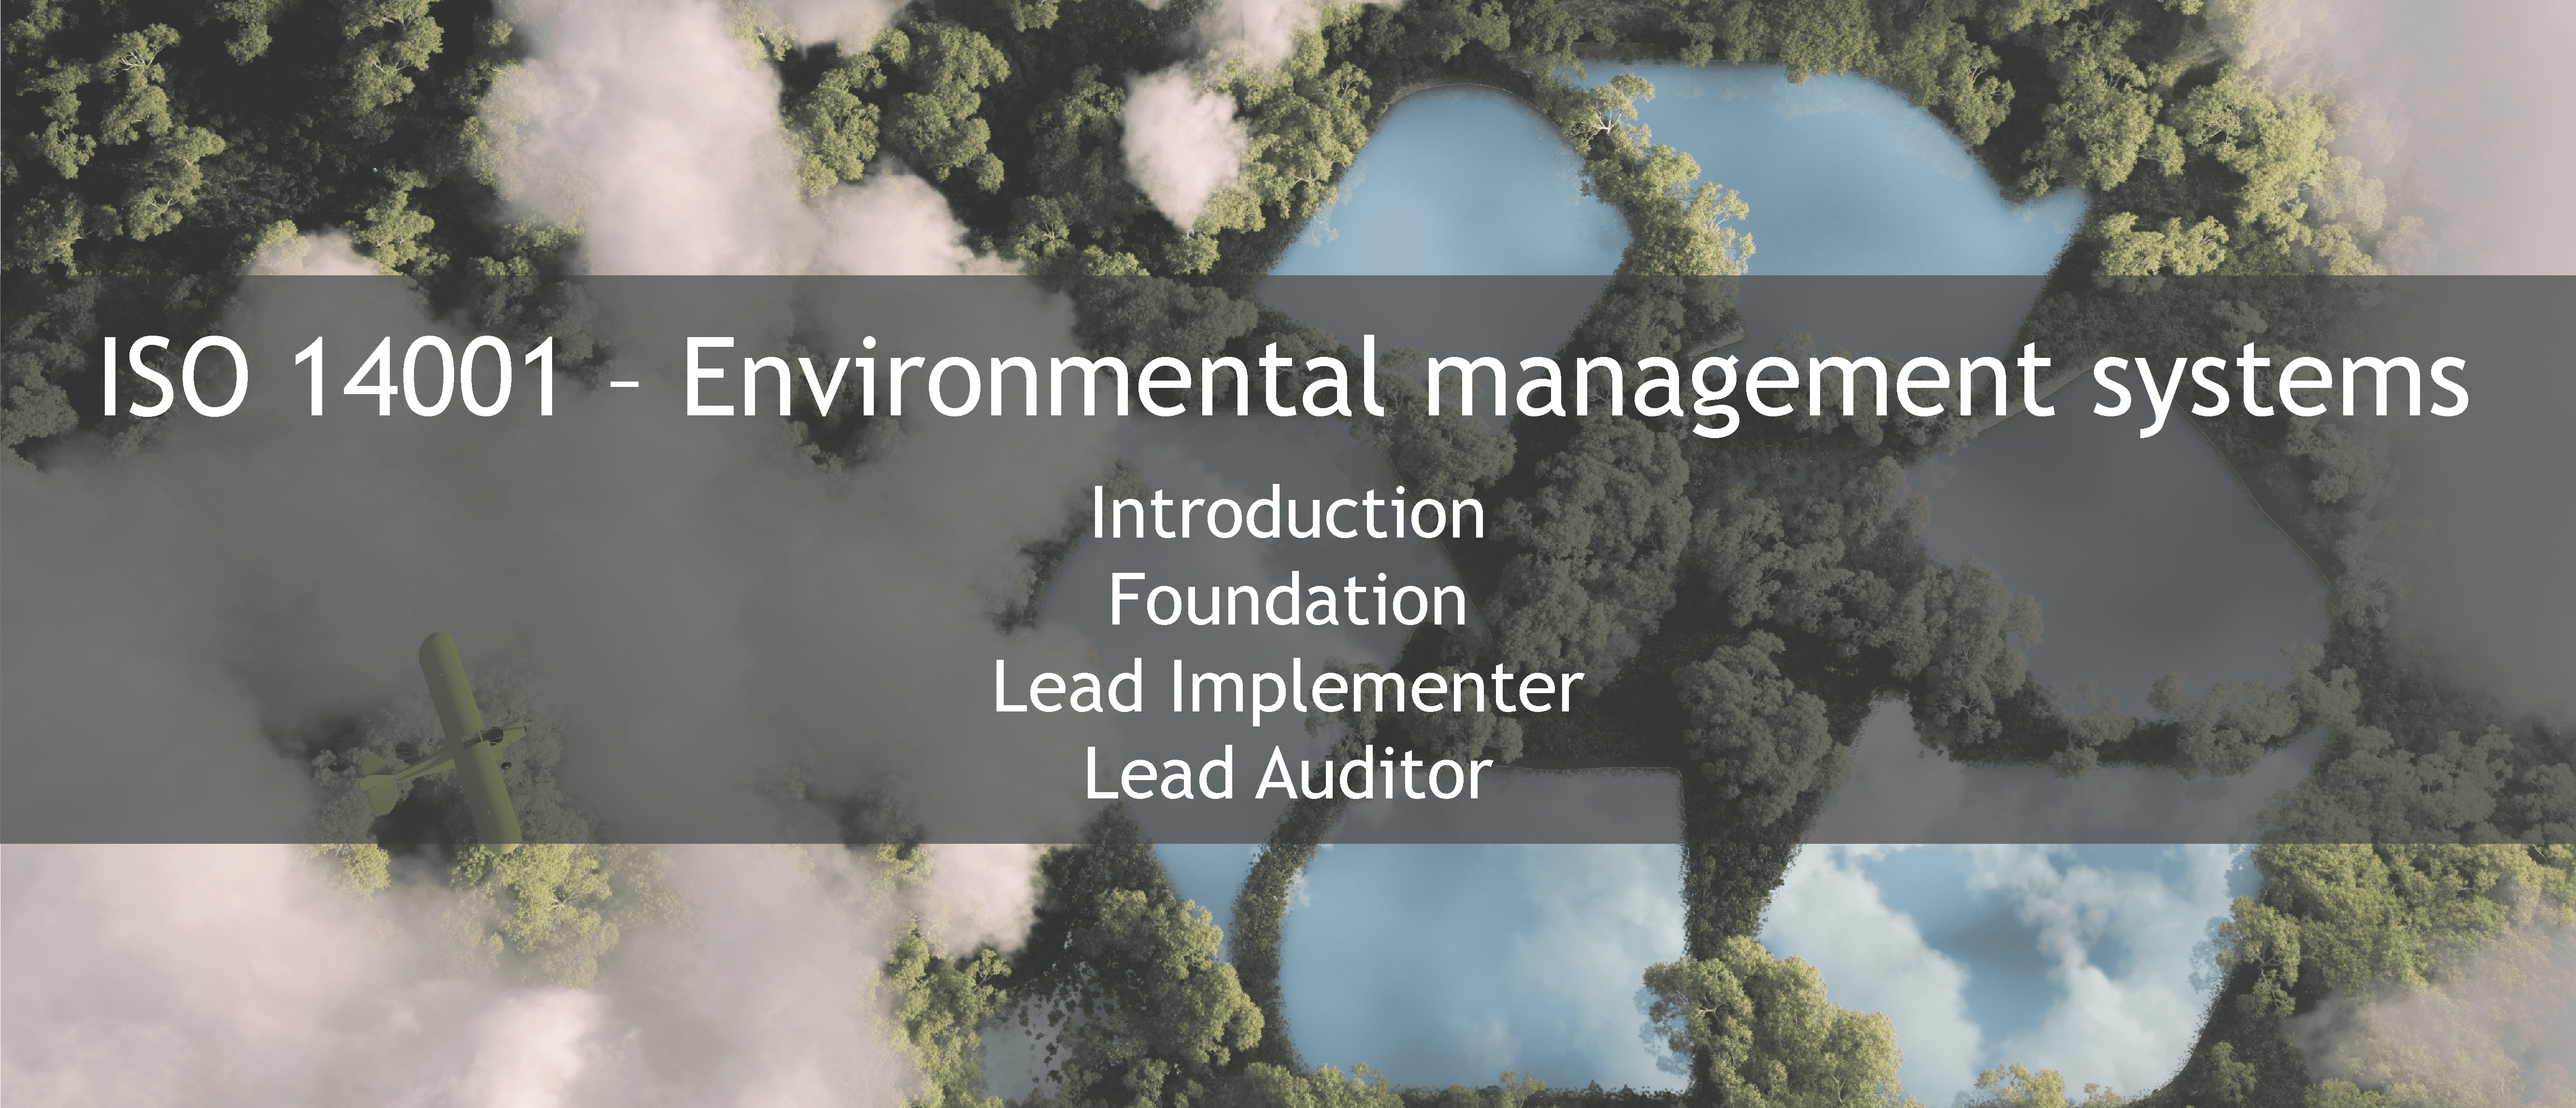 ISO 14001 training offer - ISO 14001 - Management environnemental